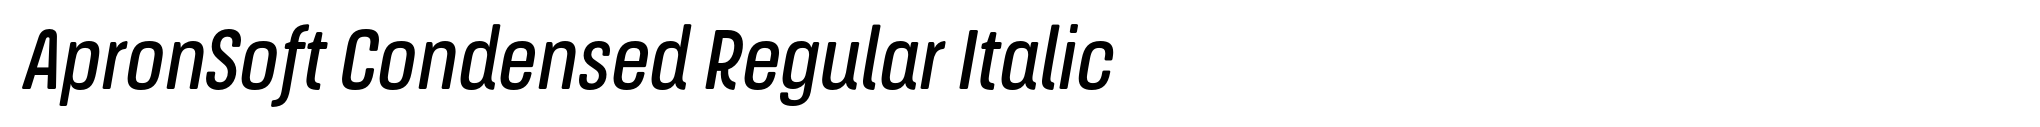 ApronSoft Condensed Regular Italic image